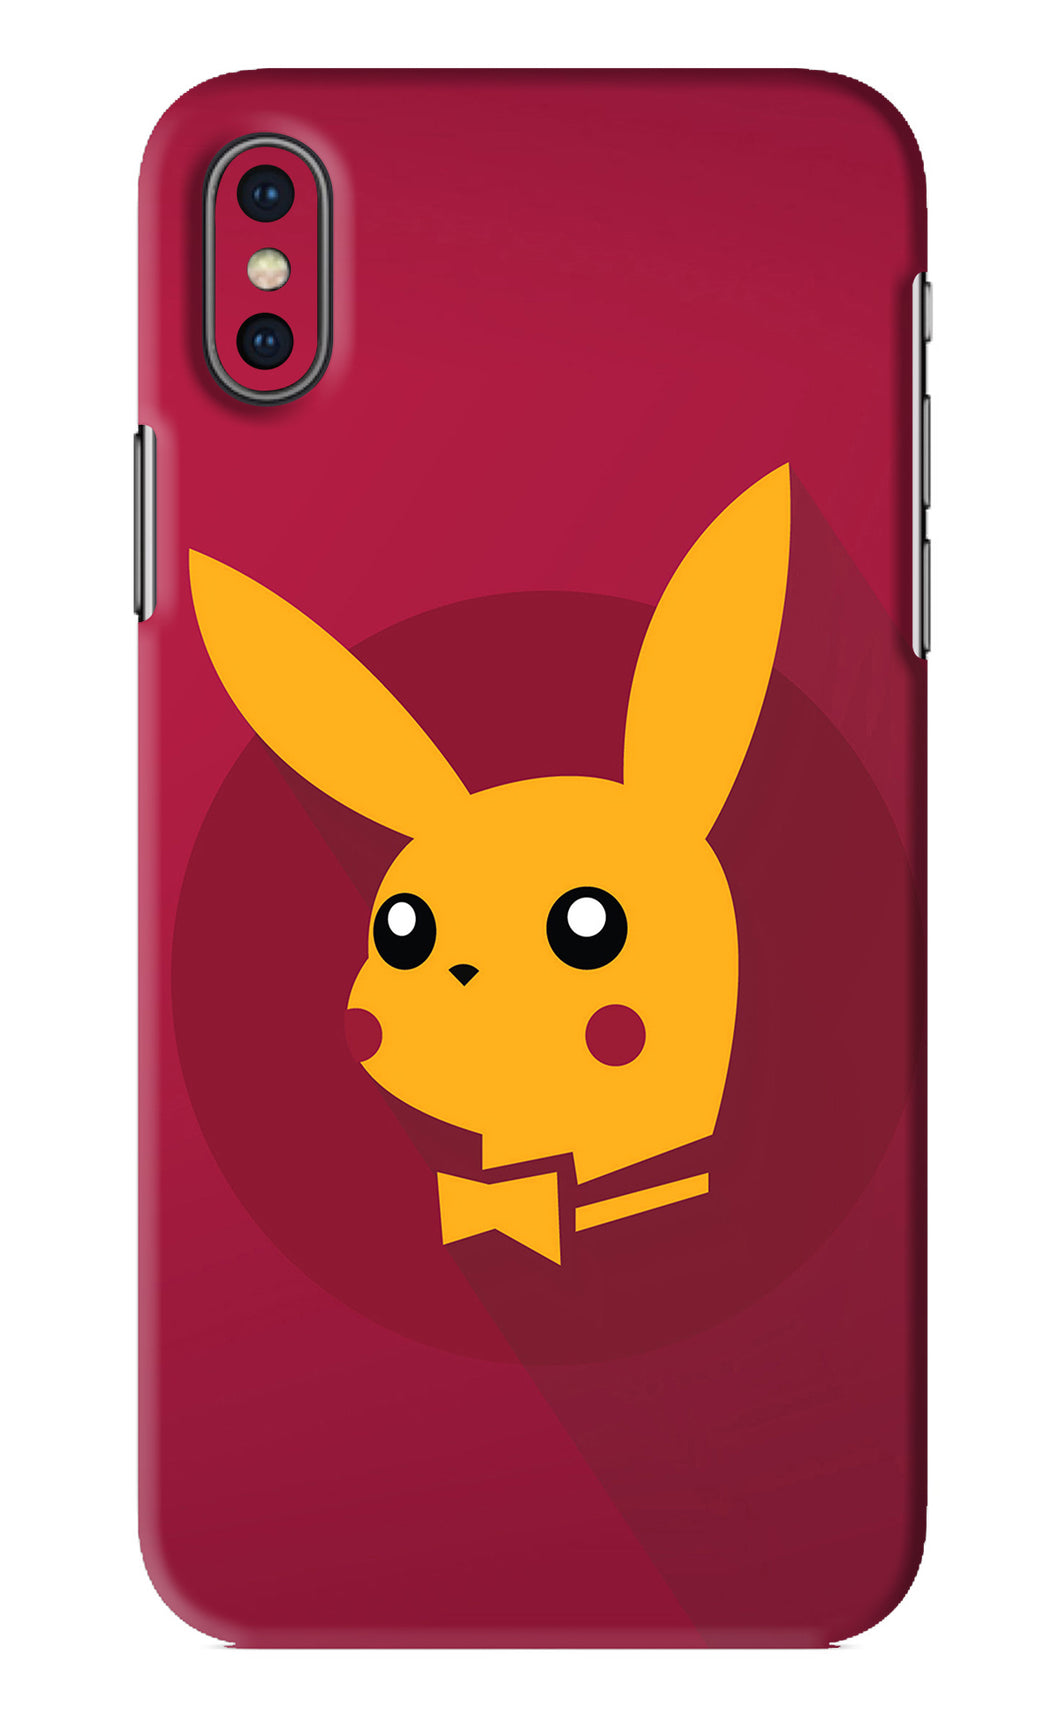 Pikachu iPhone X Back Skin Wrap